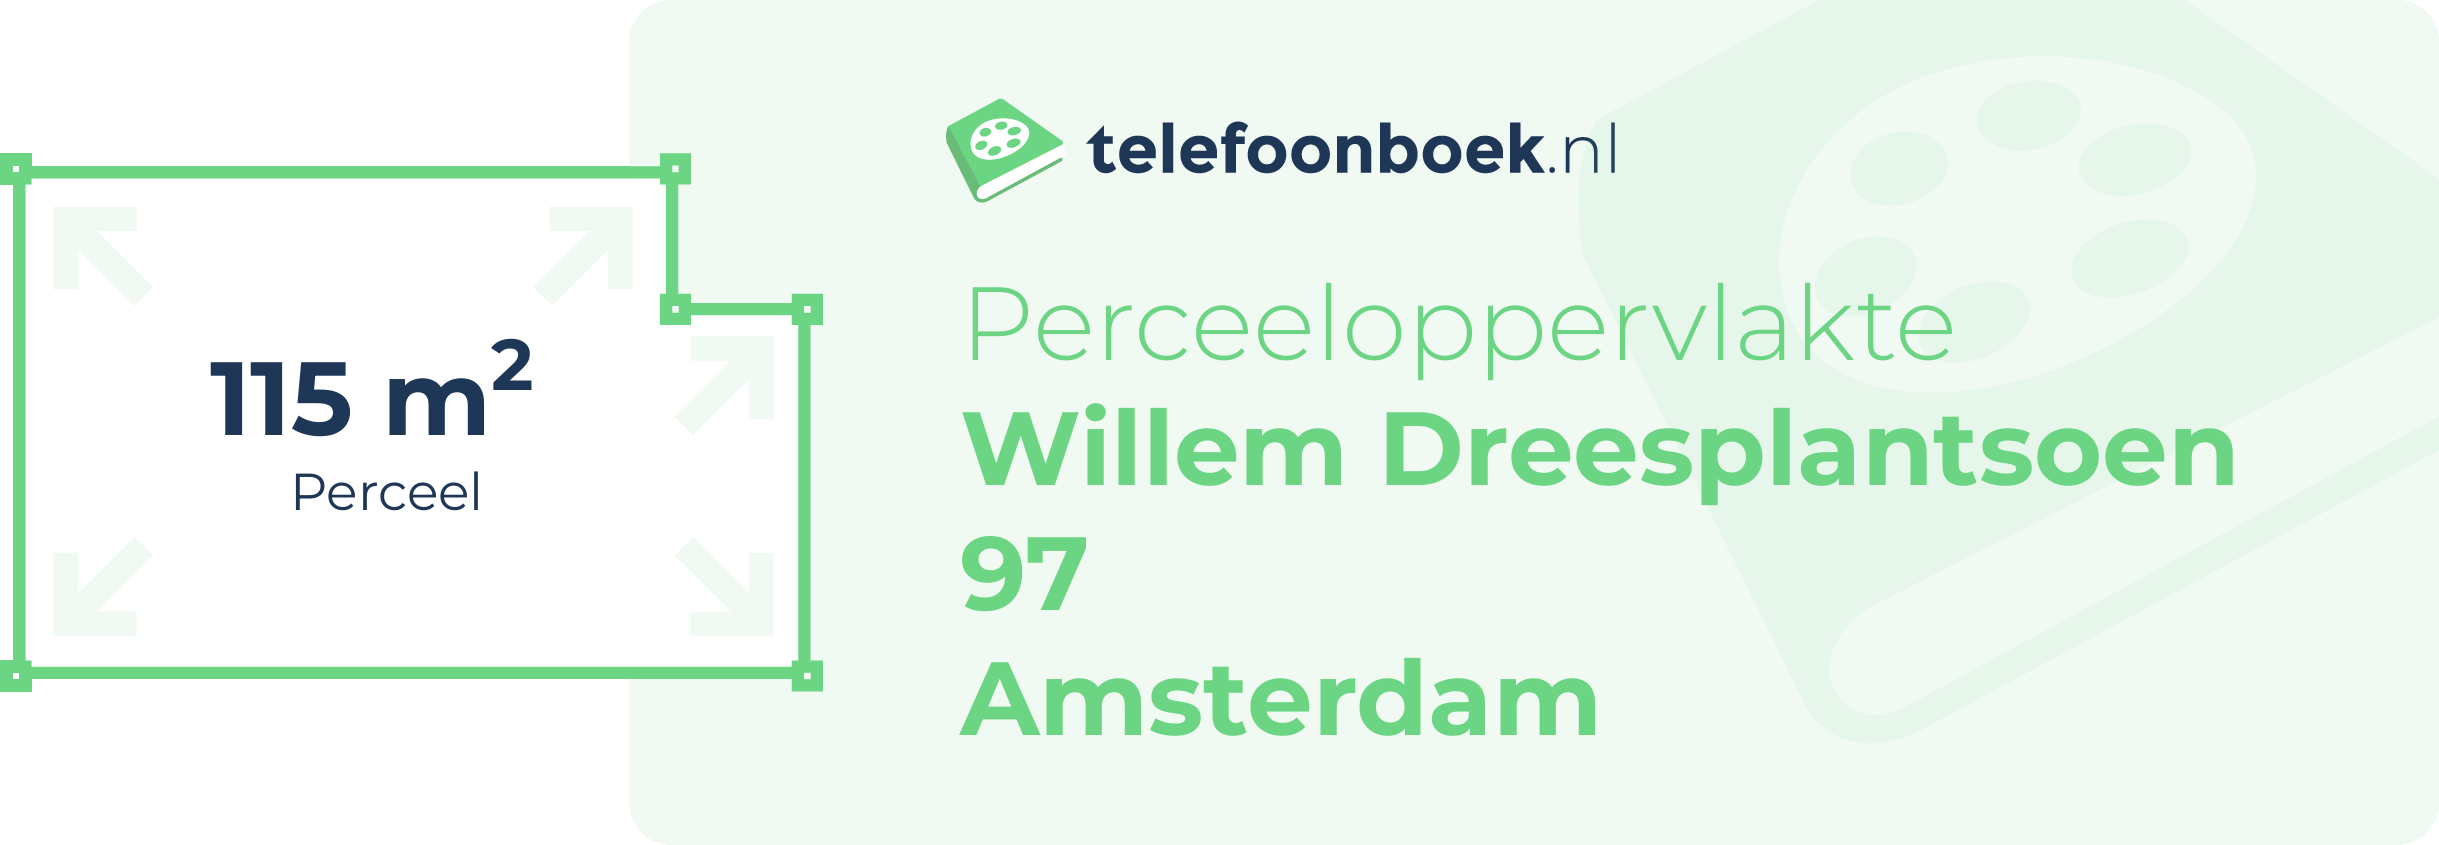 Perceeloppervlakte Willem Dreesplantsoen 97 Amsterdam